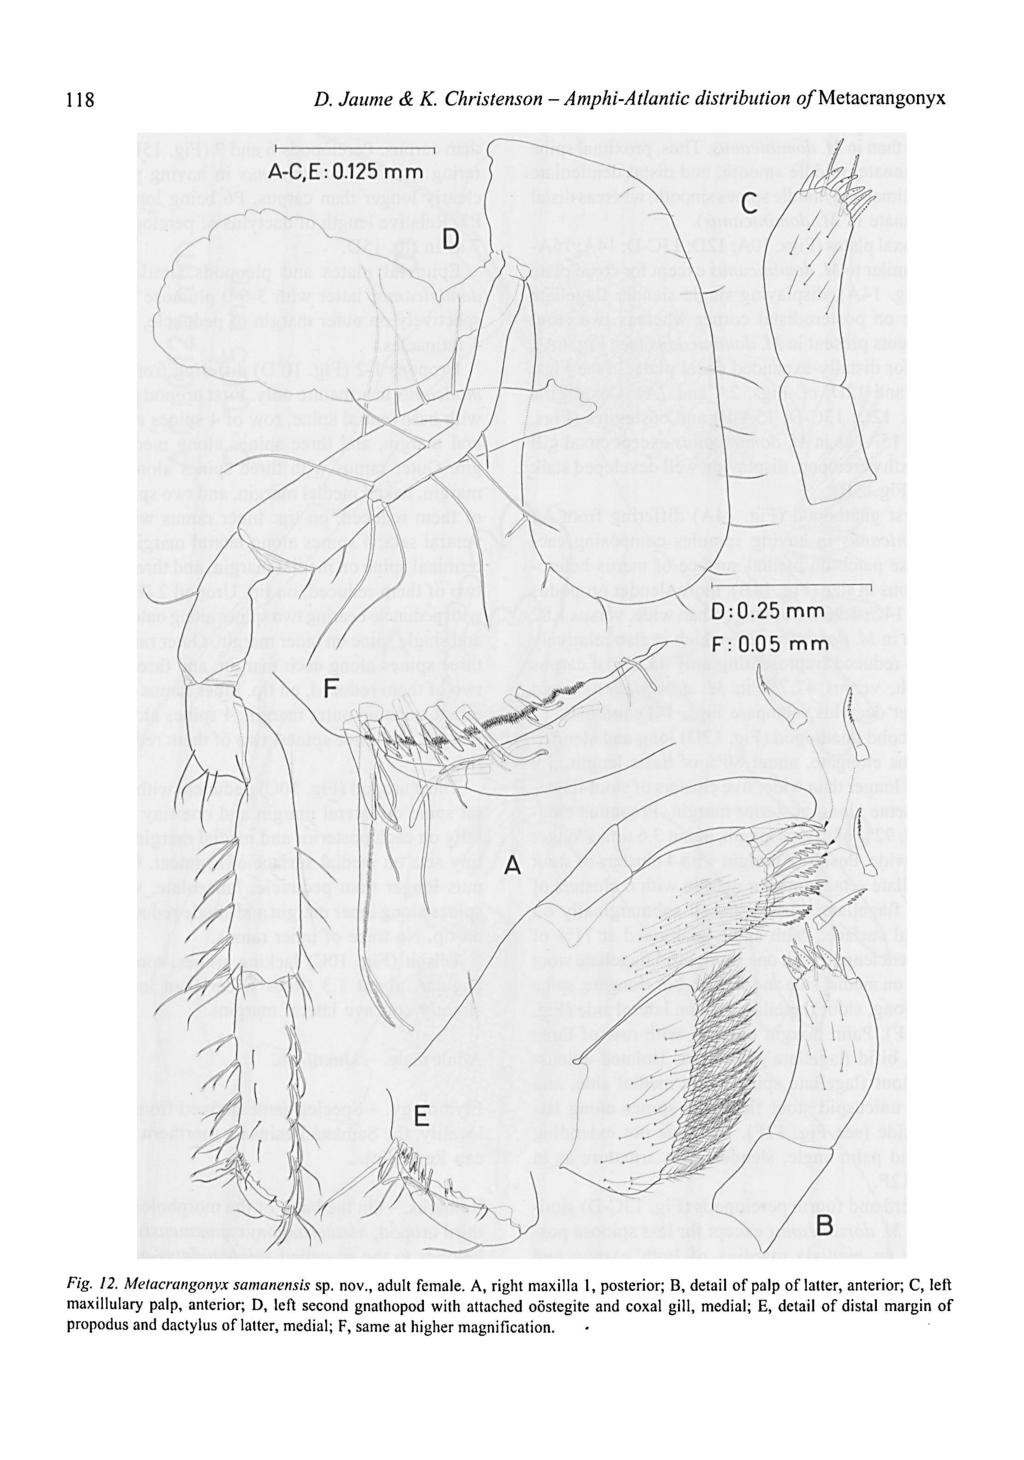 Amphi-Atlantic I 18 D. Jaume & K. Christenson - distribution o/metacrangonyx Fig. 12. Metacrangonyx samanensis sp, nov., adult female.